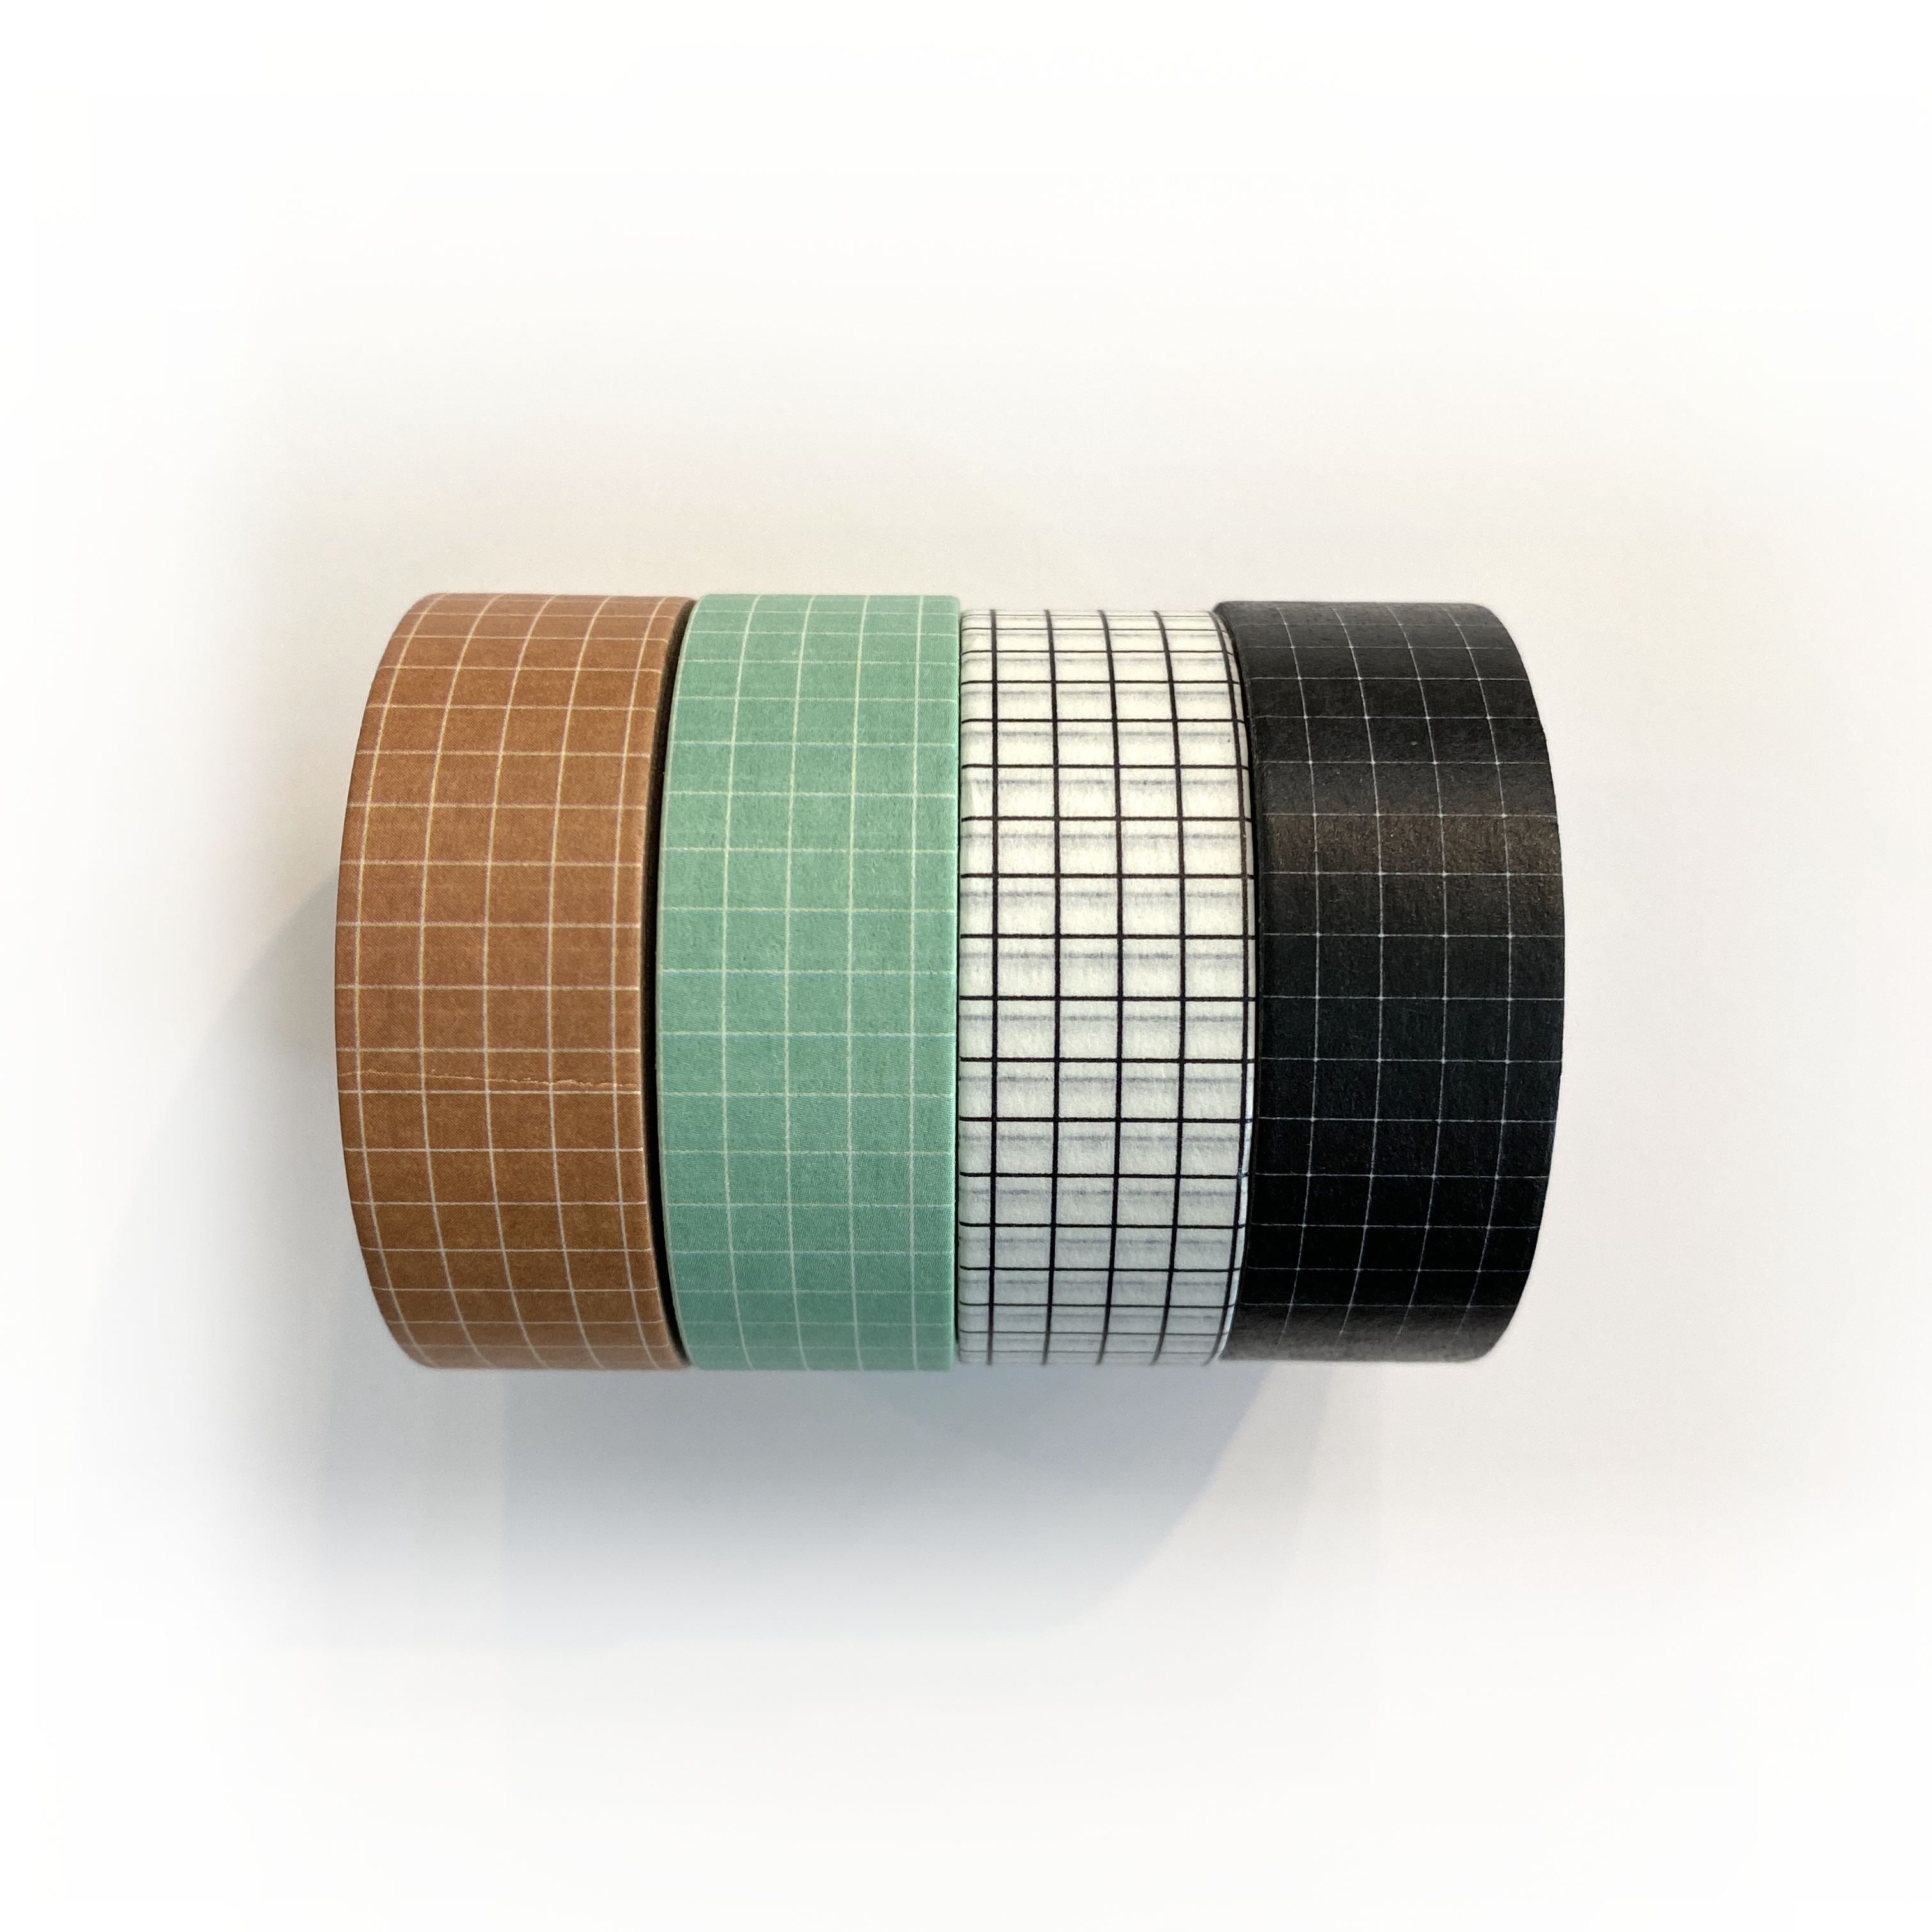 Mint Grid Washi Tape, Green Washi Tape, 1 Piece, Grid Washi Tape